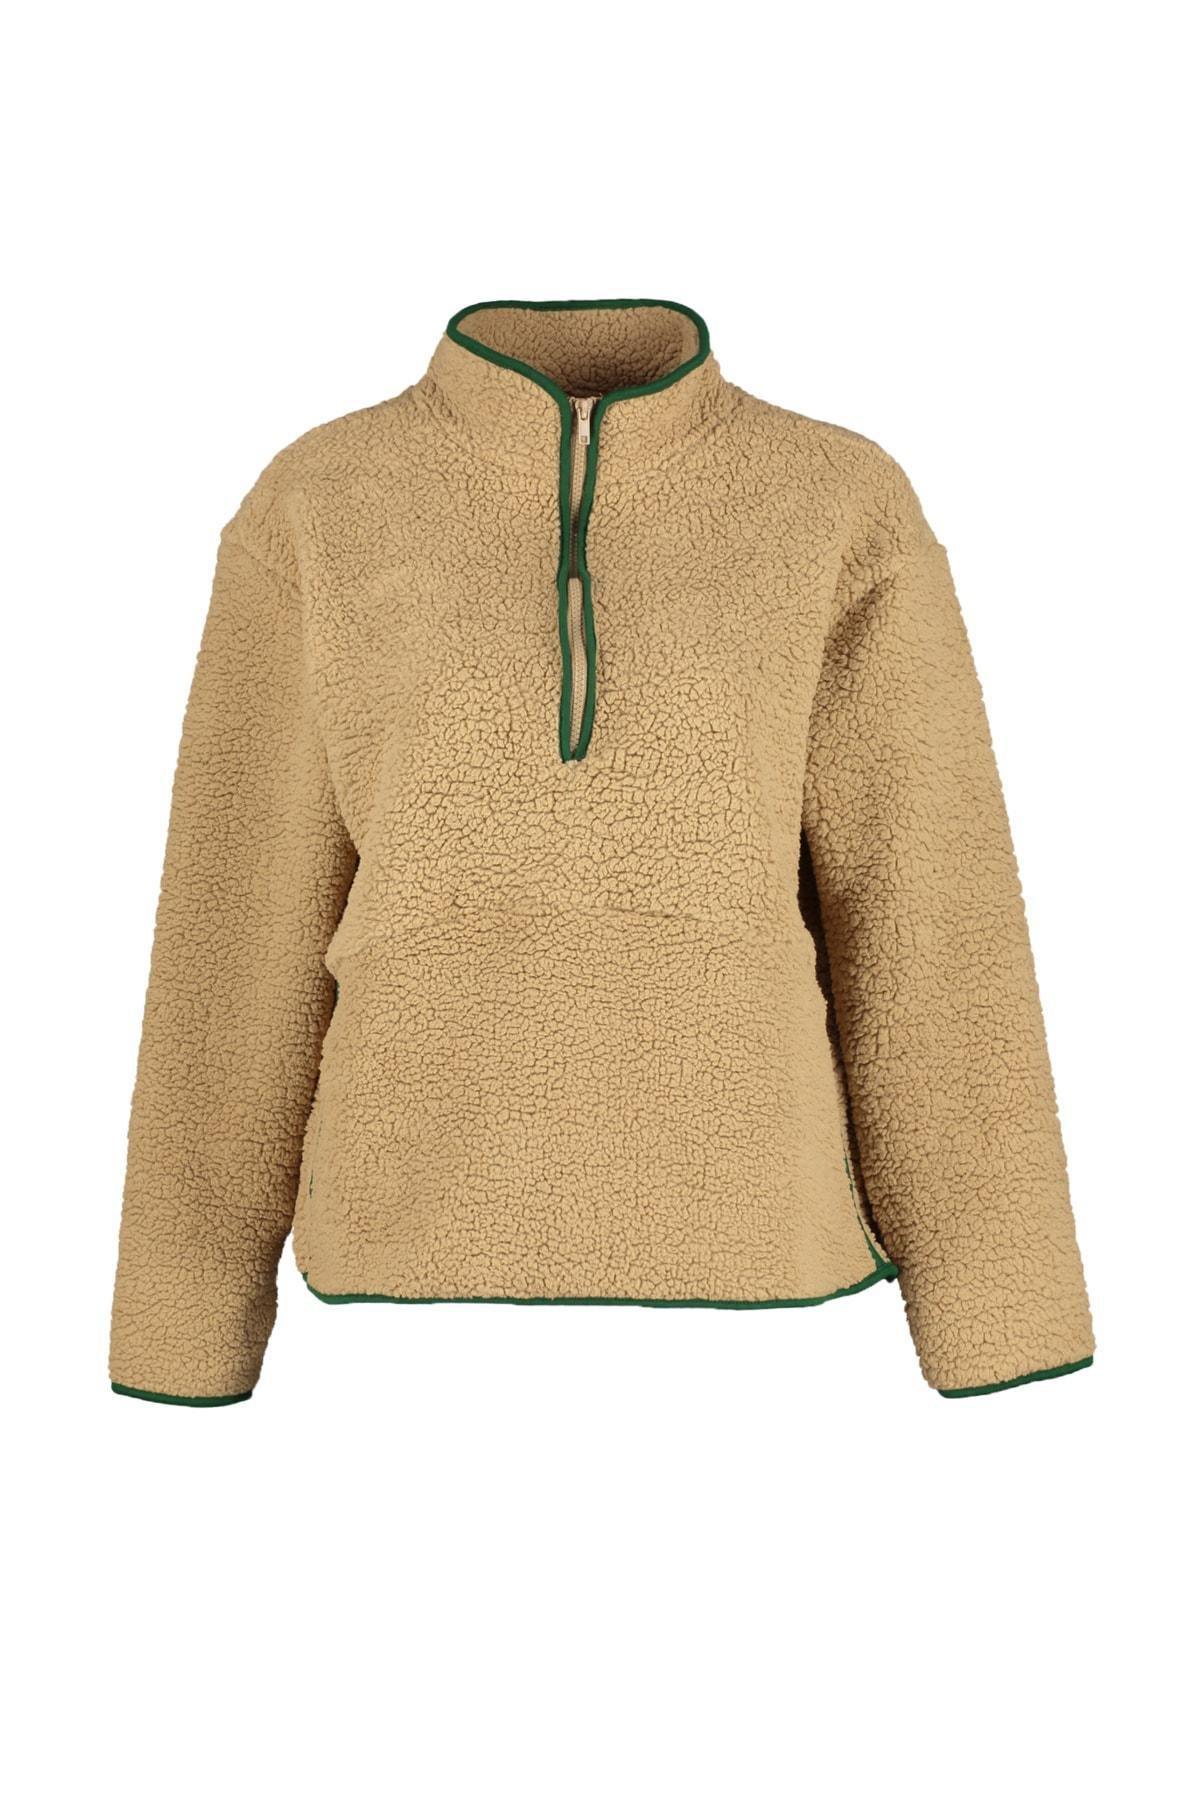 Trendyol - Brown Plush Sports Sweatshirt